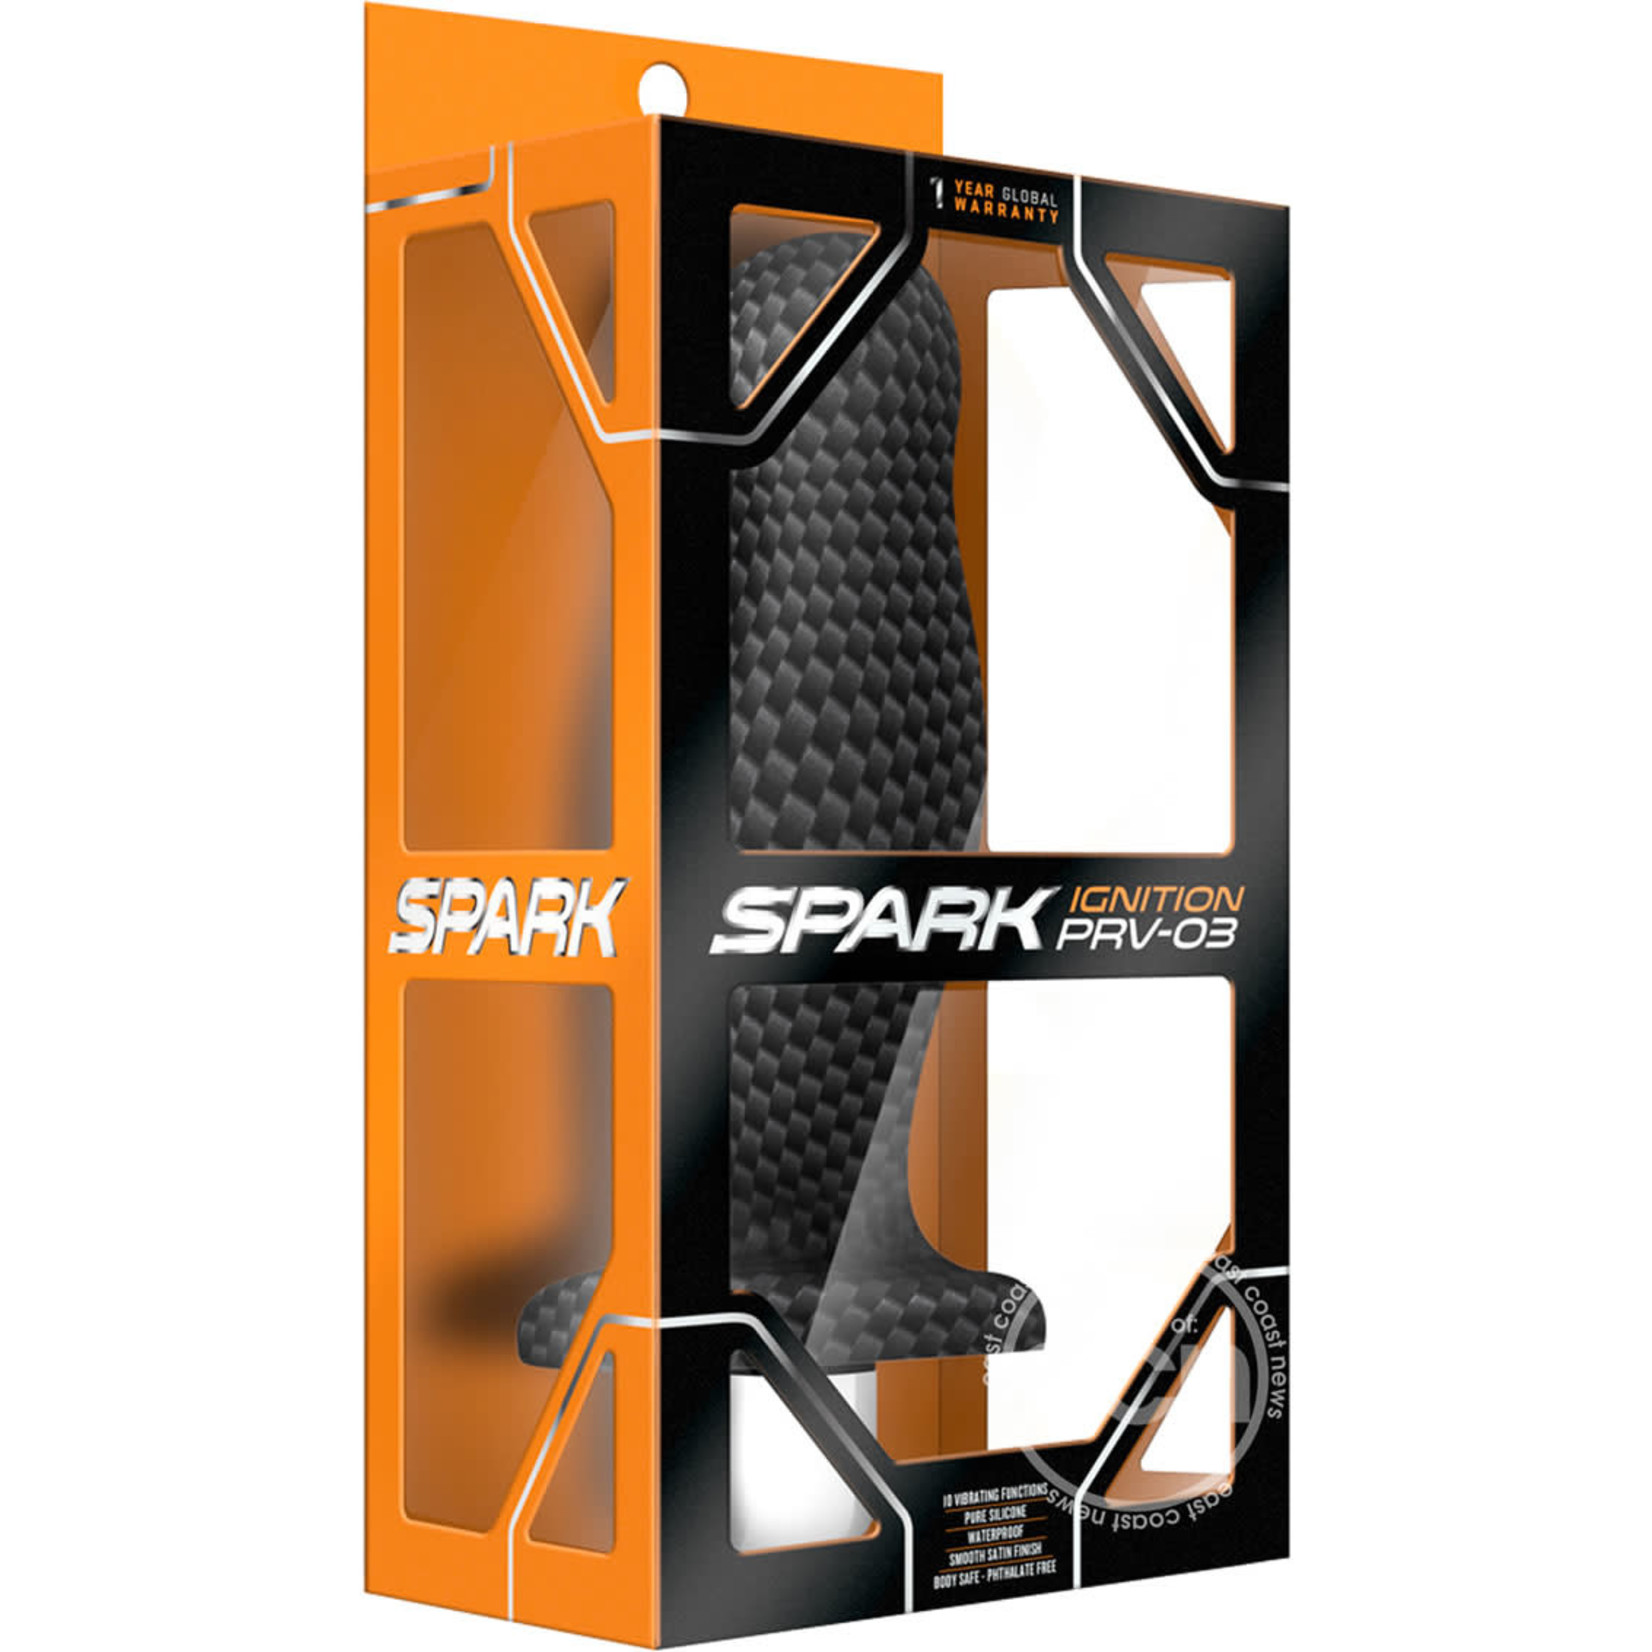 Spark Ignition PRV-03 Silicone Butt Plug - Carbon Fiber